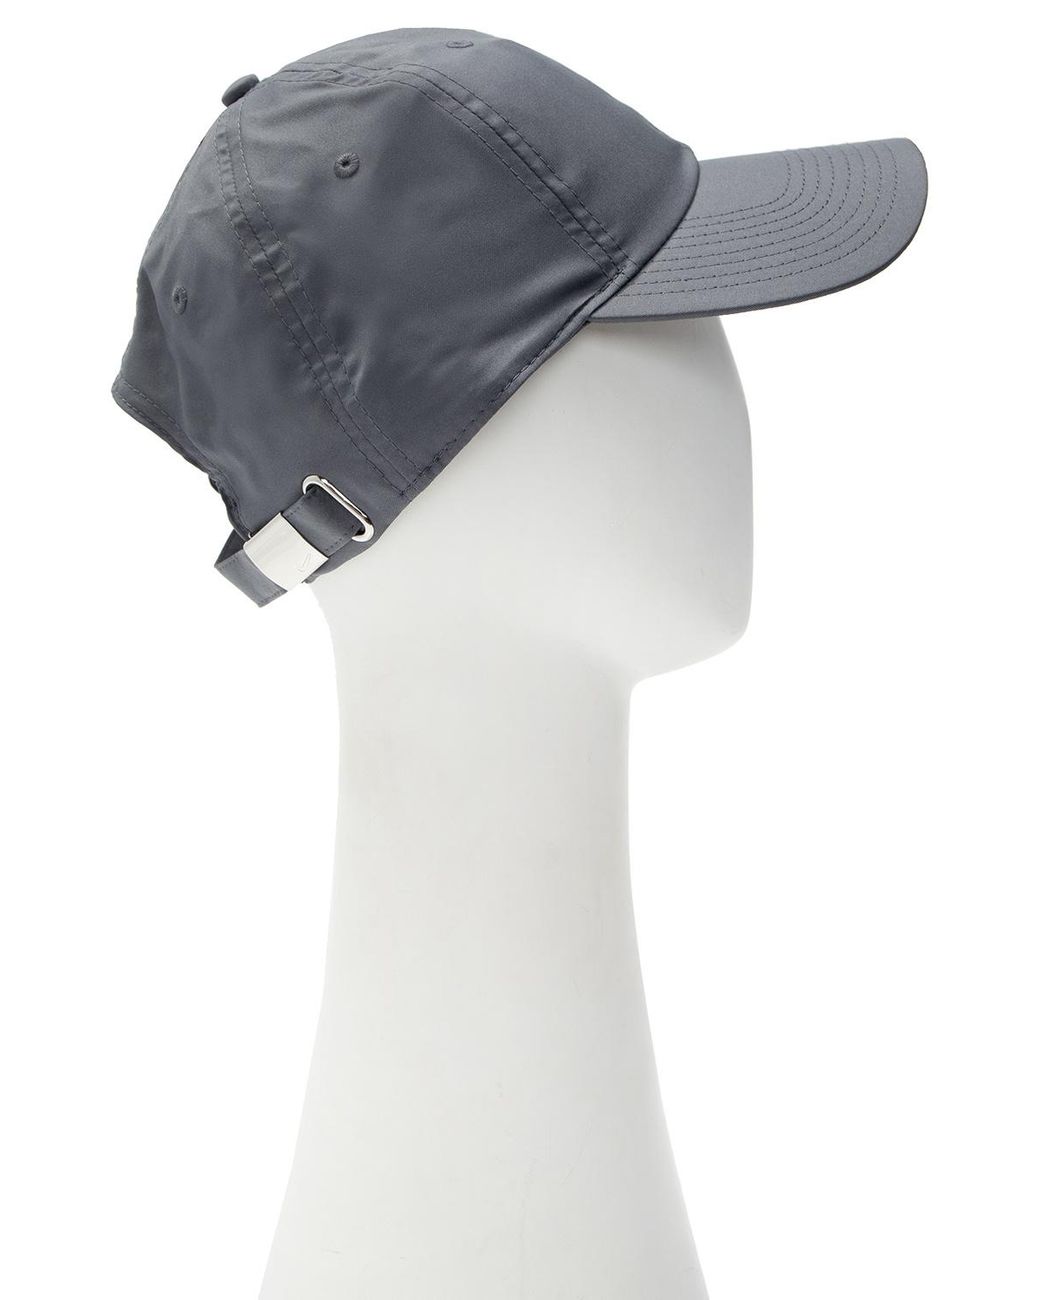 Nike Synthetic Metal Swoosh Cap in Grey (Gray) | Lyst